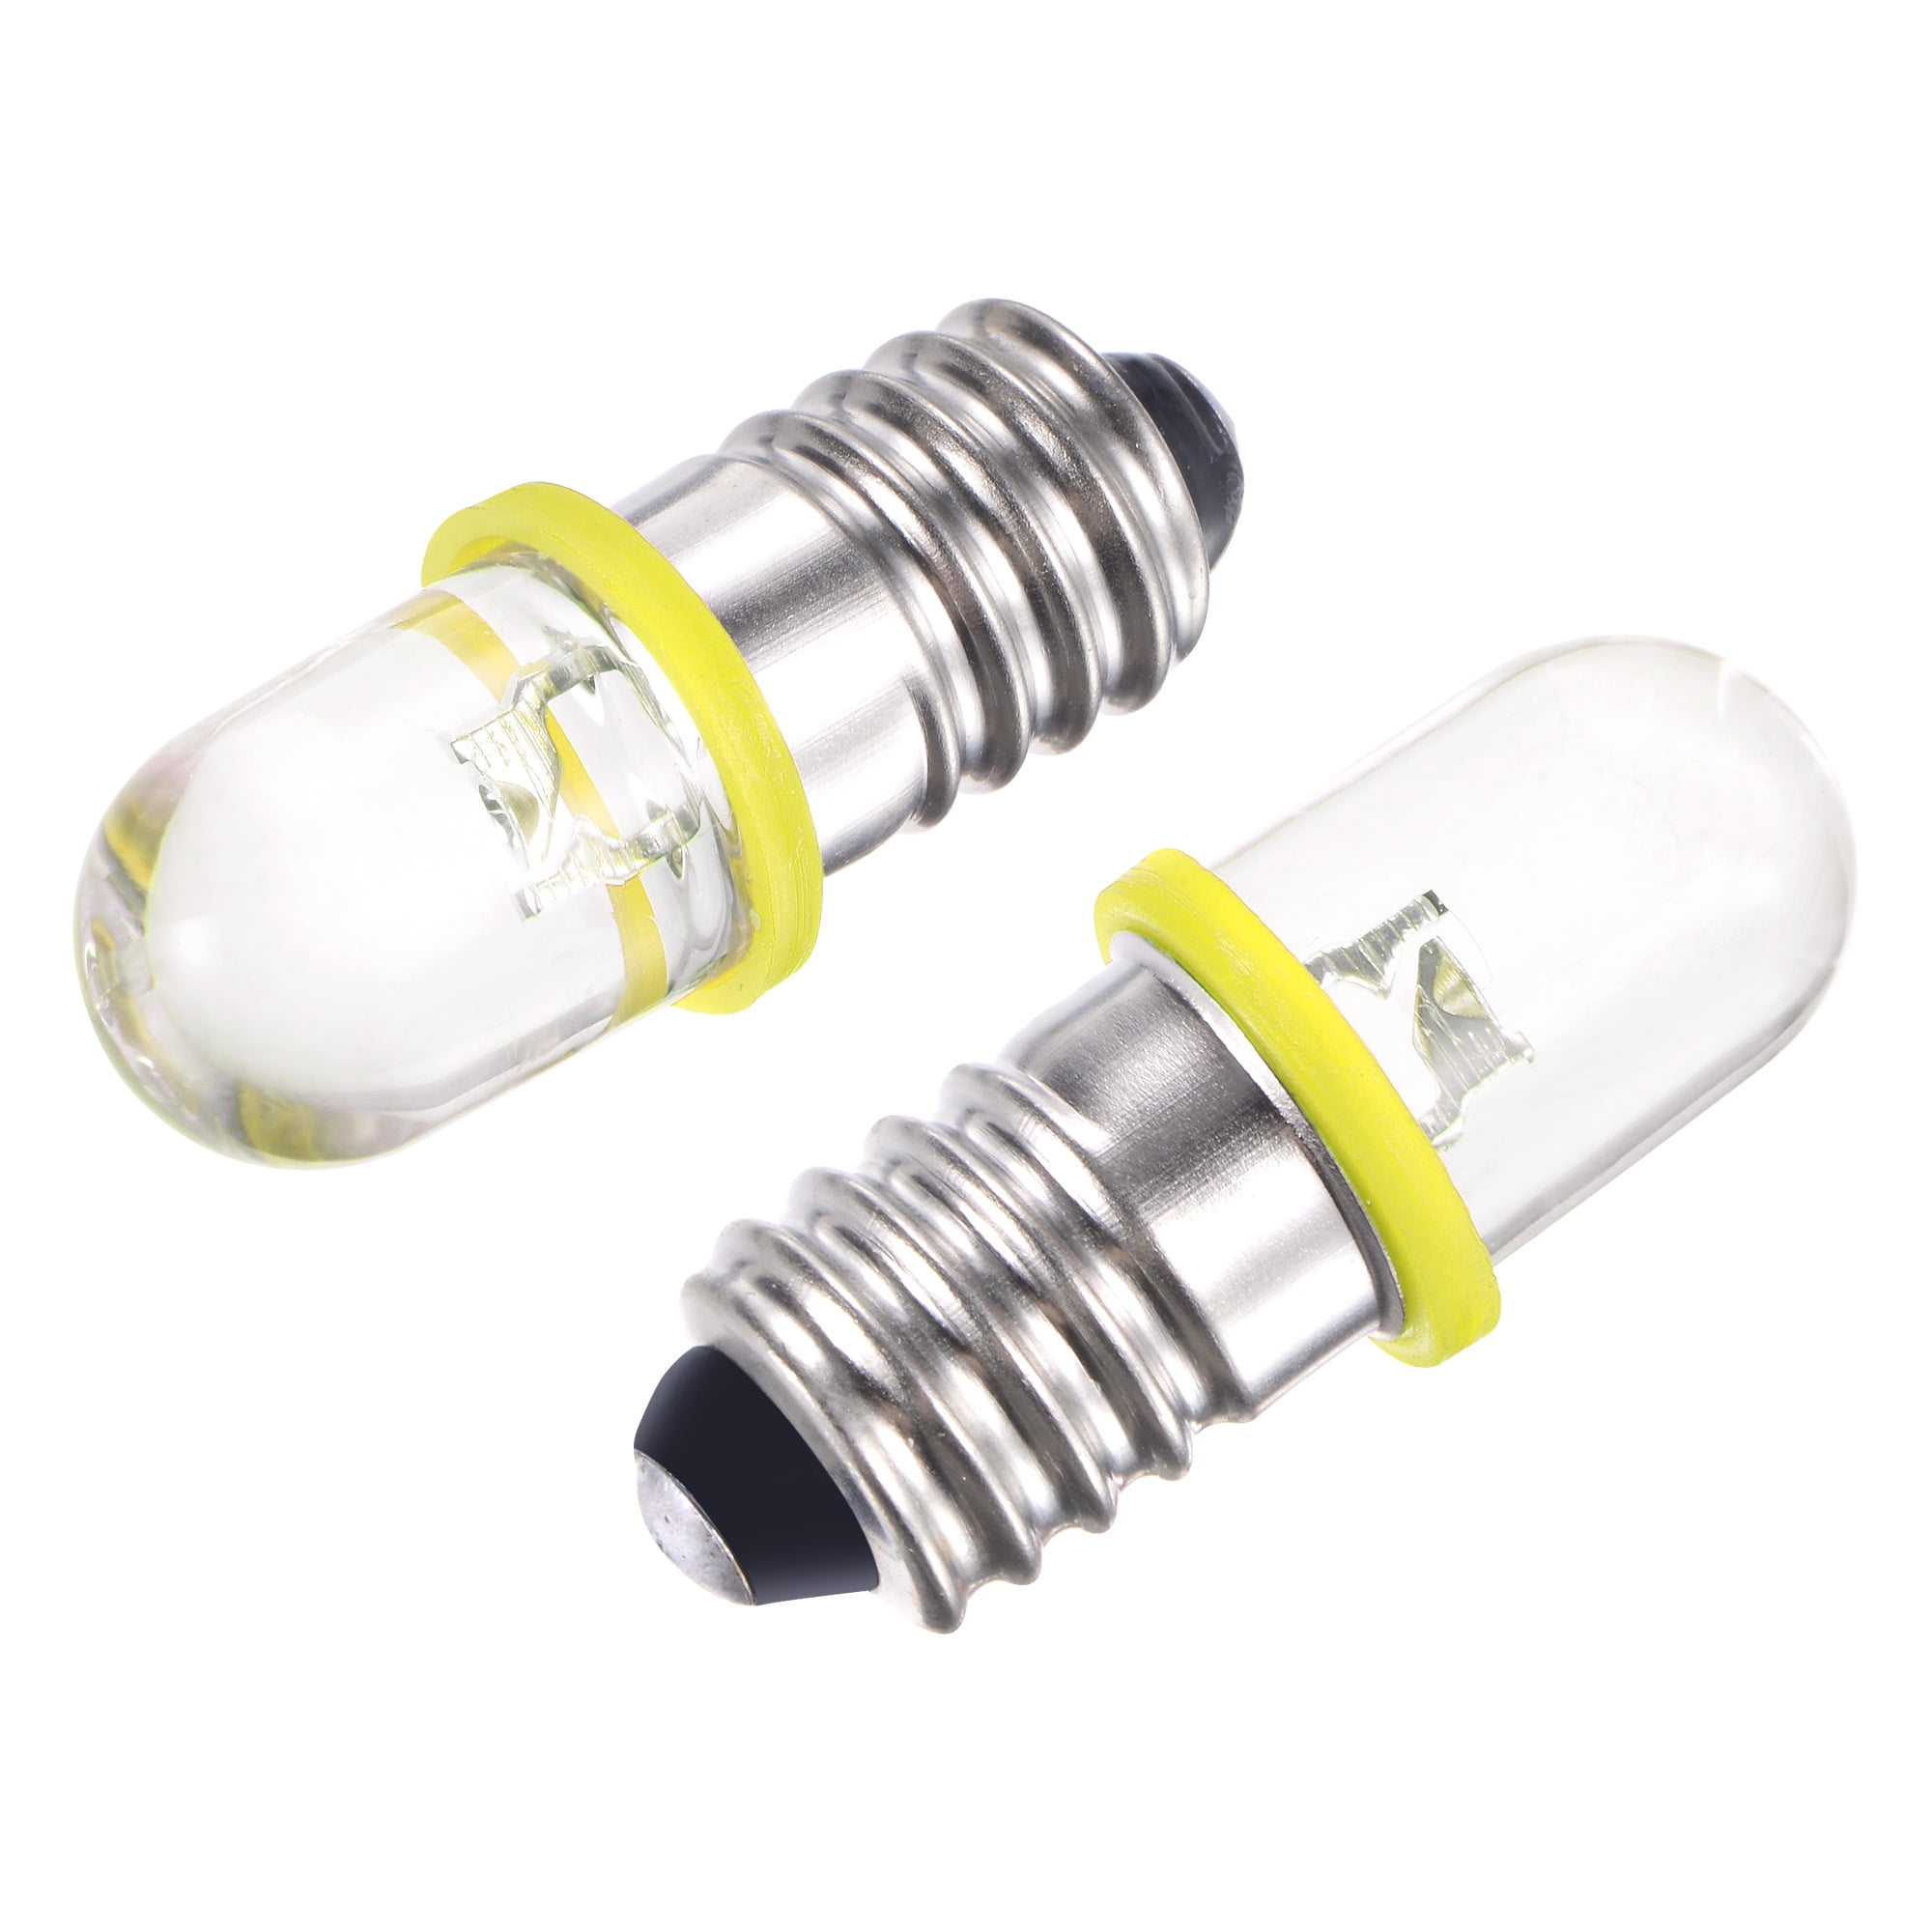 THREE Adapters to Use E12 Candelabra Light Bulbs in E10 miniature fixture base 